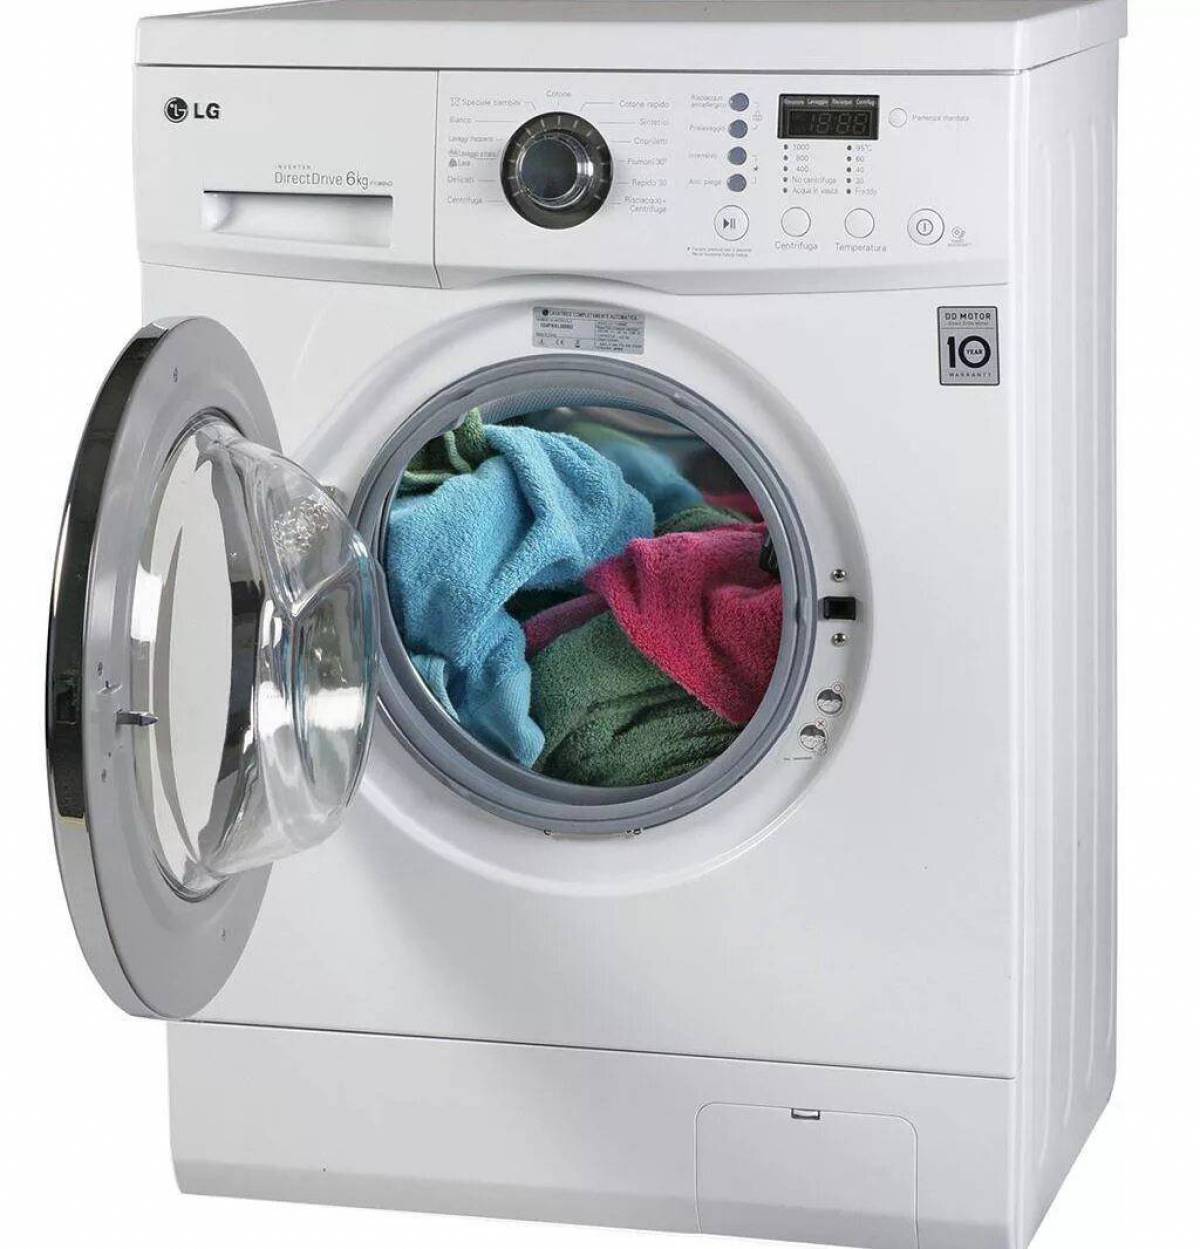 Стир машины автомат. LG 1089nd стиральная машина. Стиральная машинка LG f10b8nd. Стиральная машина LG washing Machine. Стиральная машина LG F-1089nd.